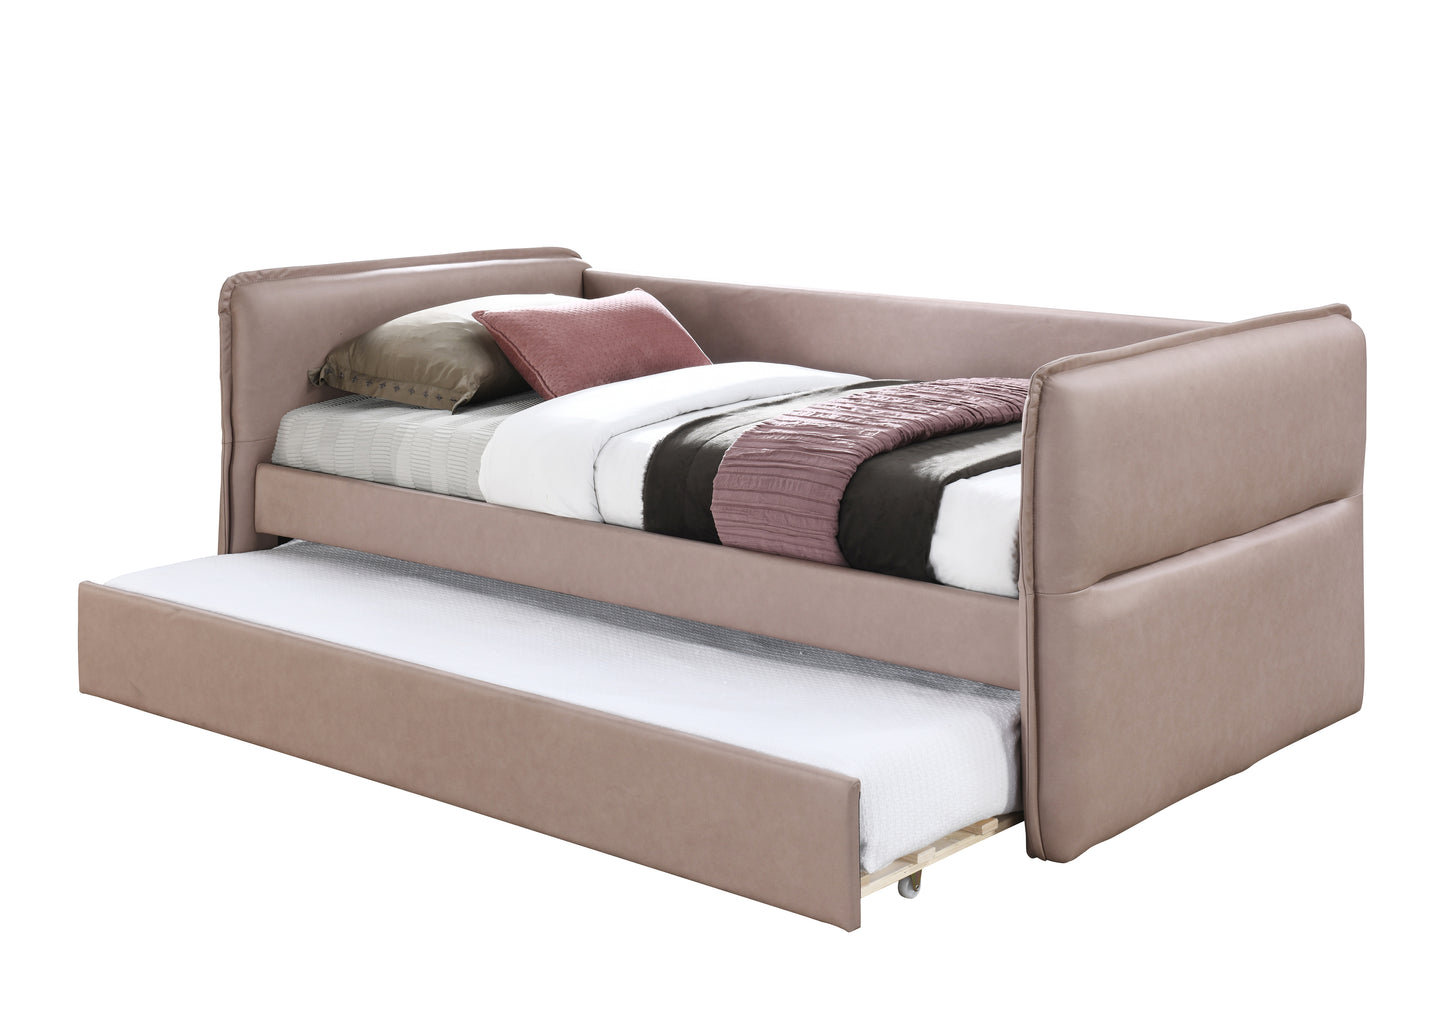 Trina Upholstered Trundle Bed